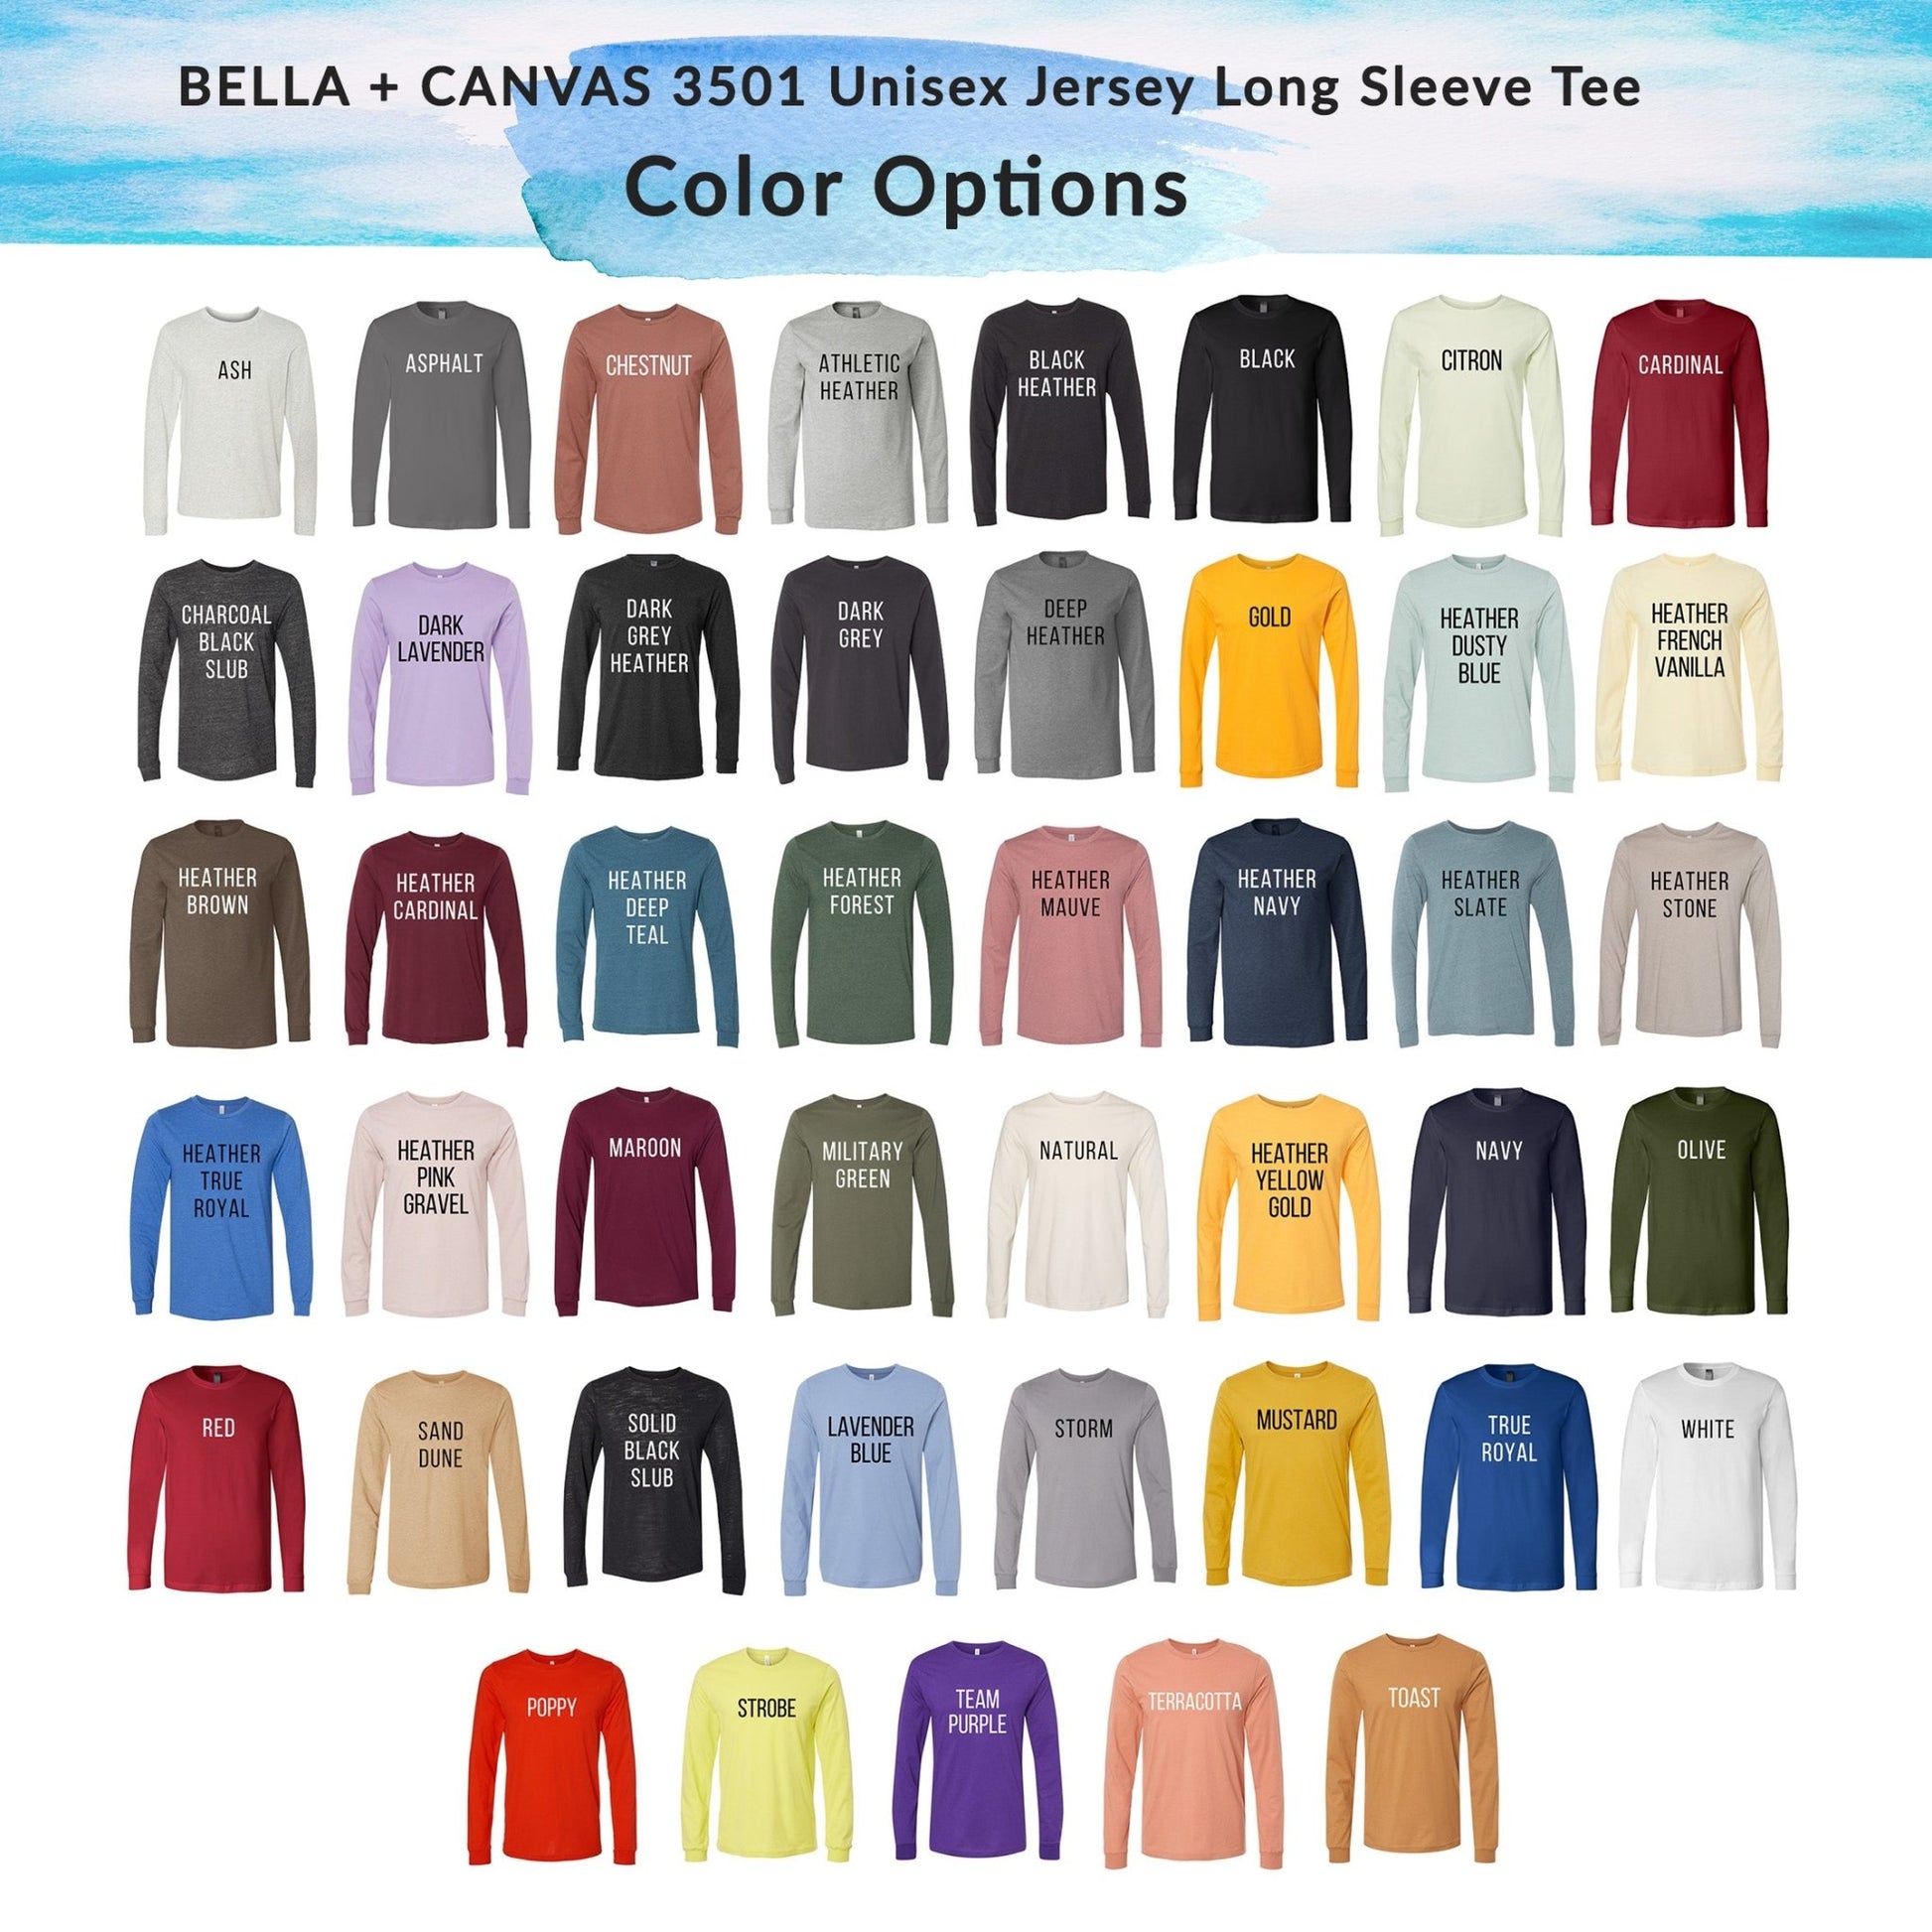 BELLA + CANVAS 3501 - Jersey Long Sleeve Tee